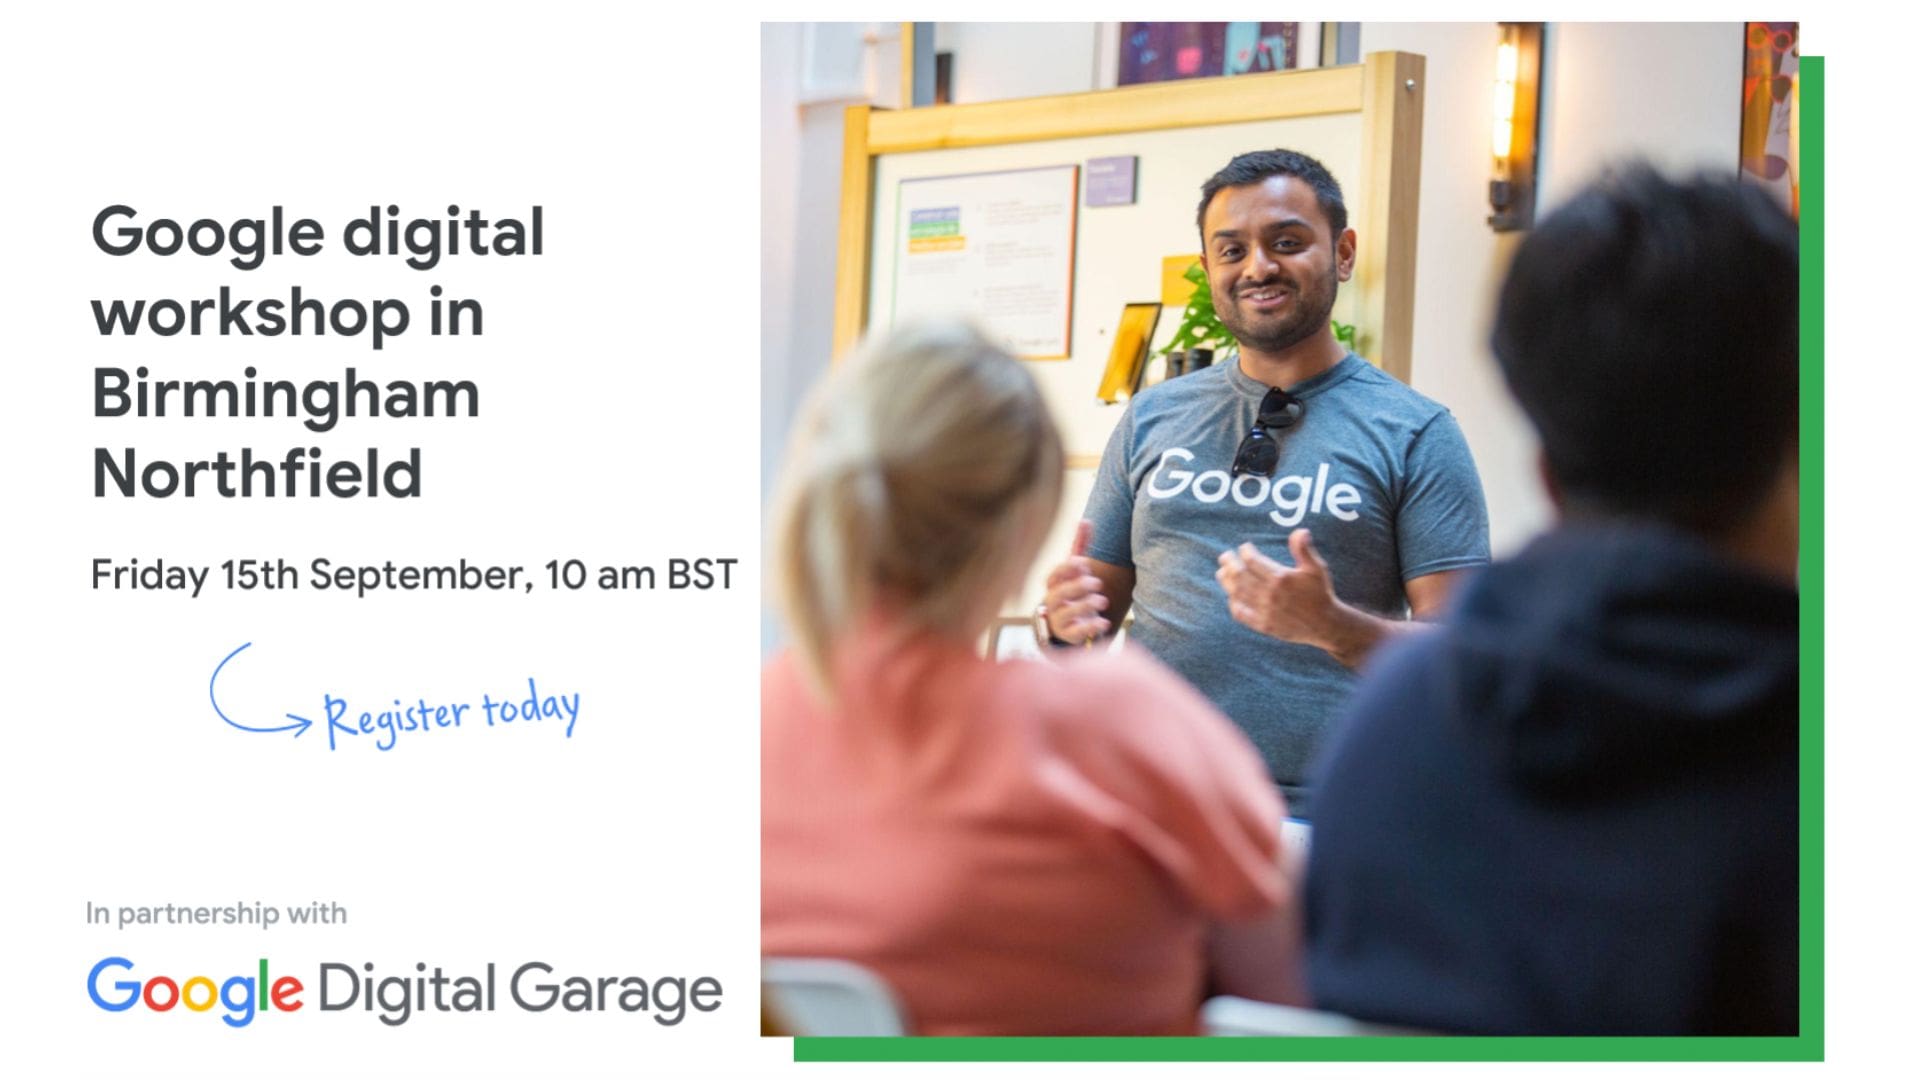 Google digital skills training: Birmingham Northfield